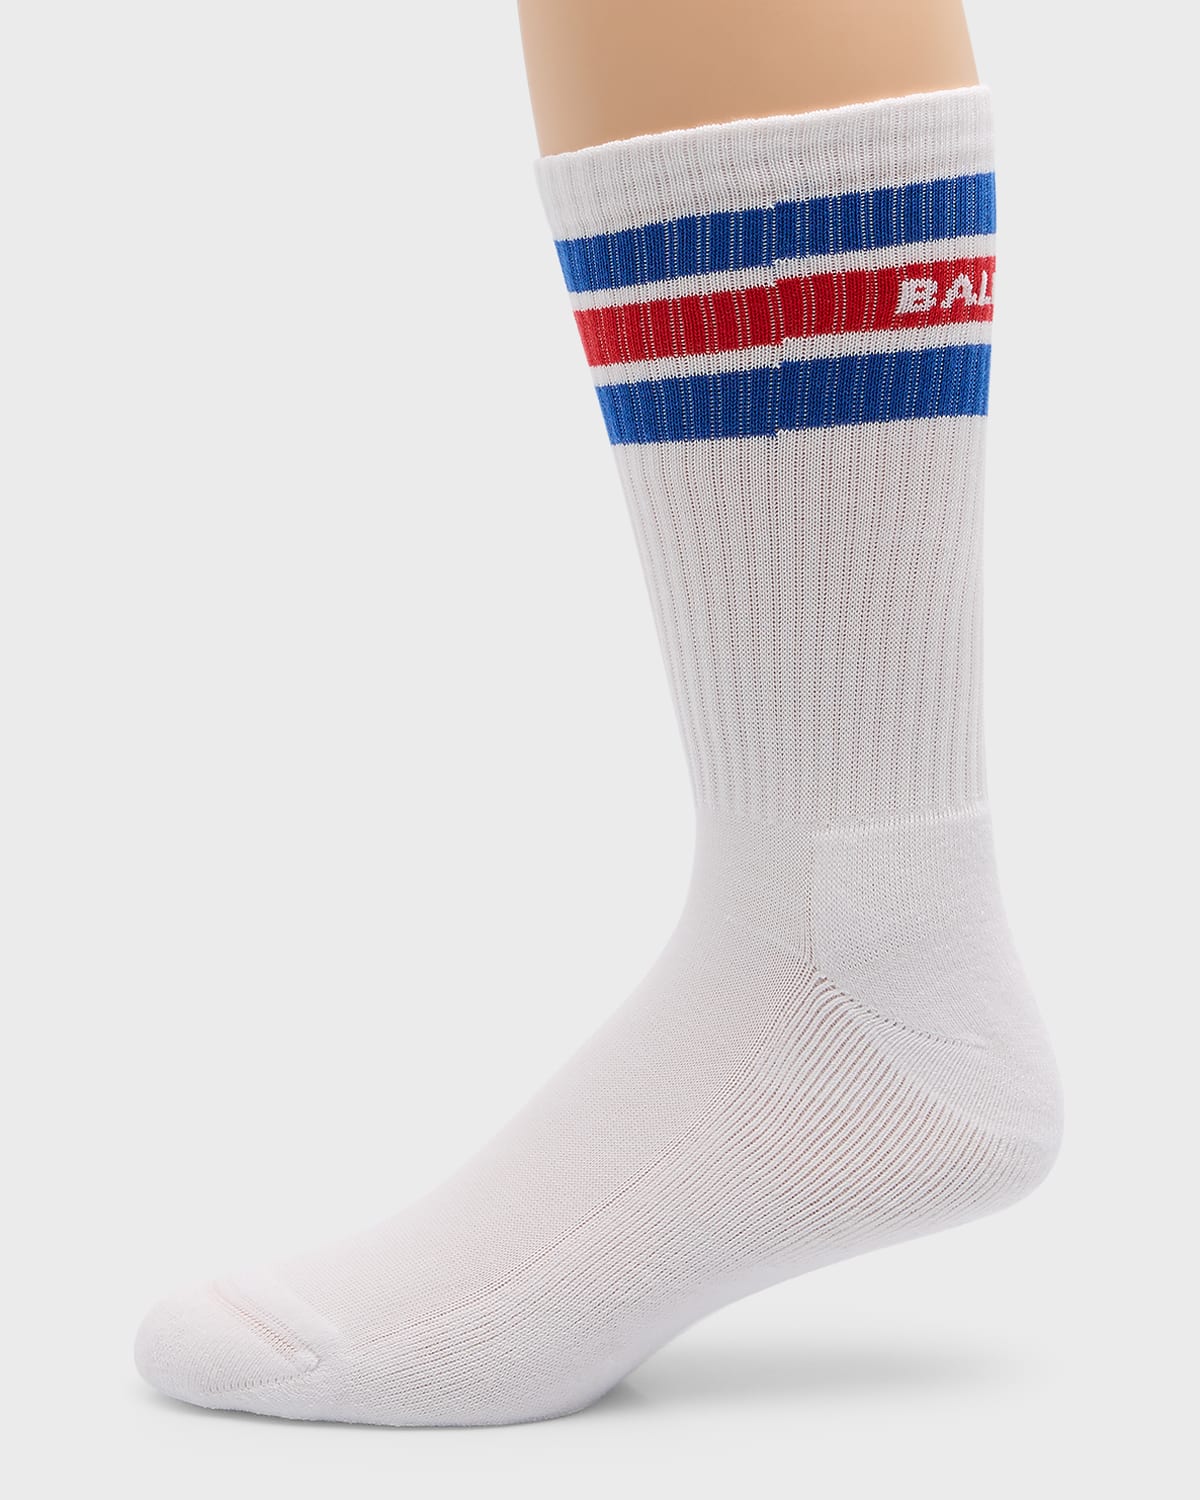 Balenciaga Men's BB Monogram Socks